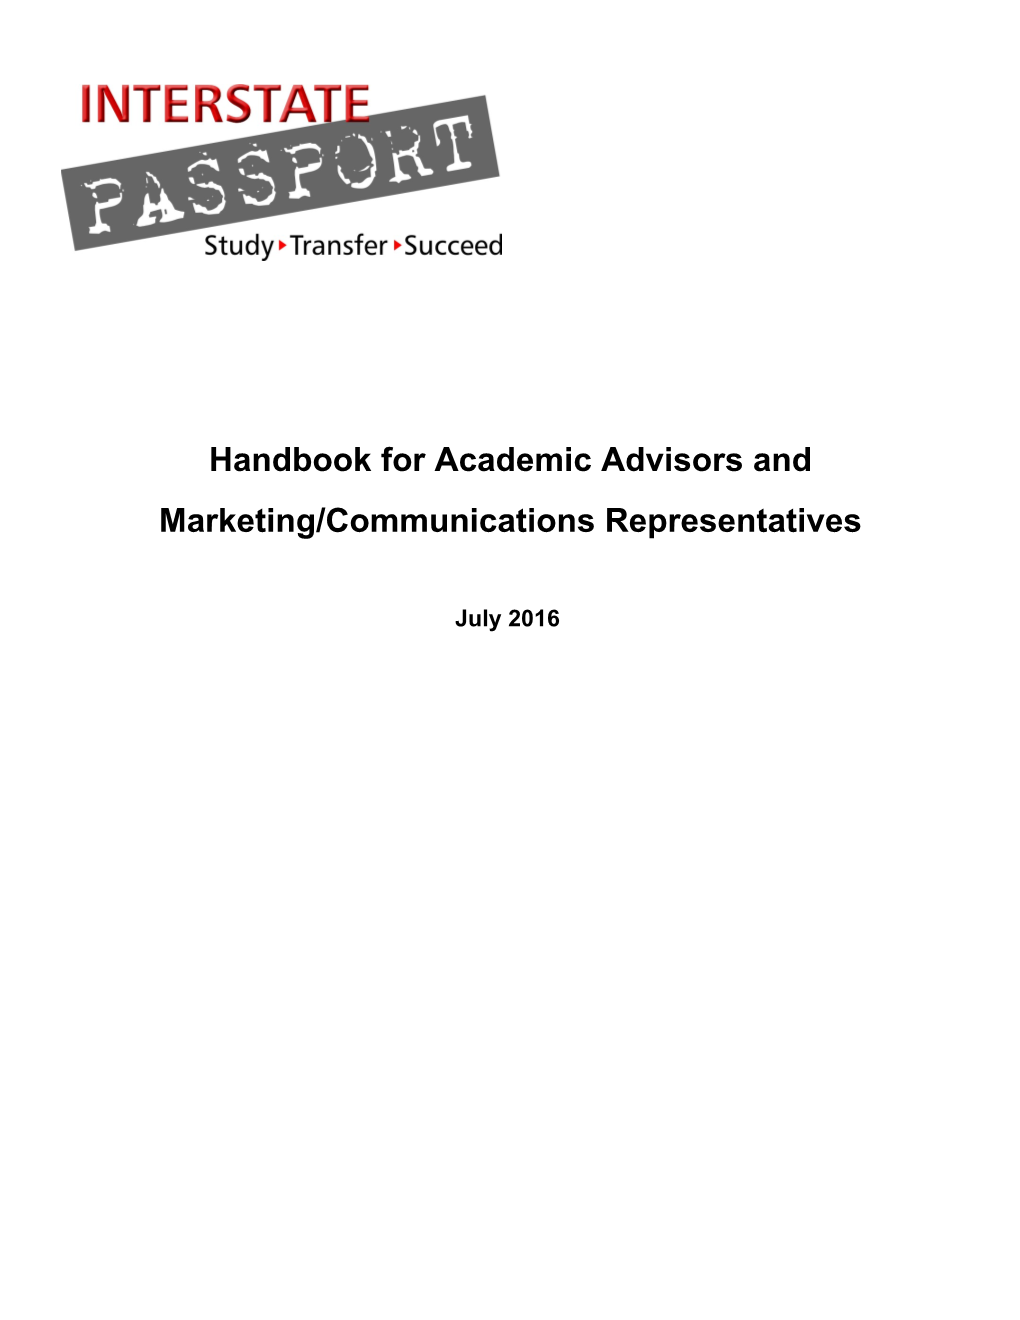 Handbook for Academic Advisors And